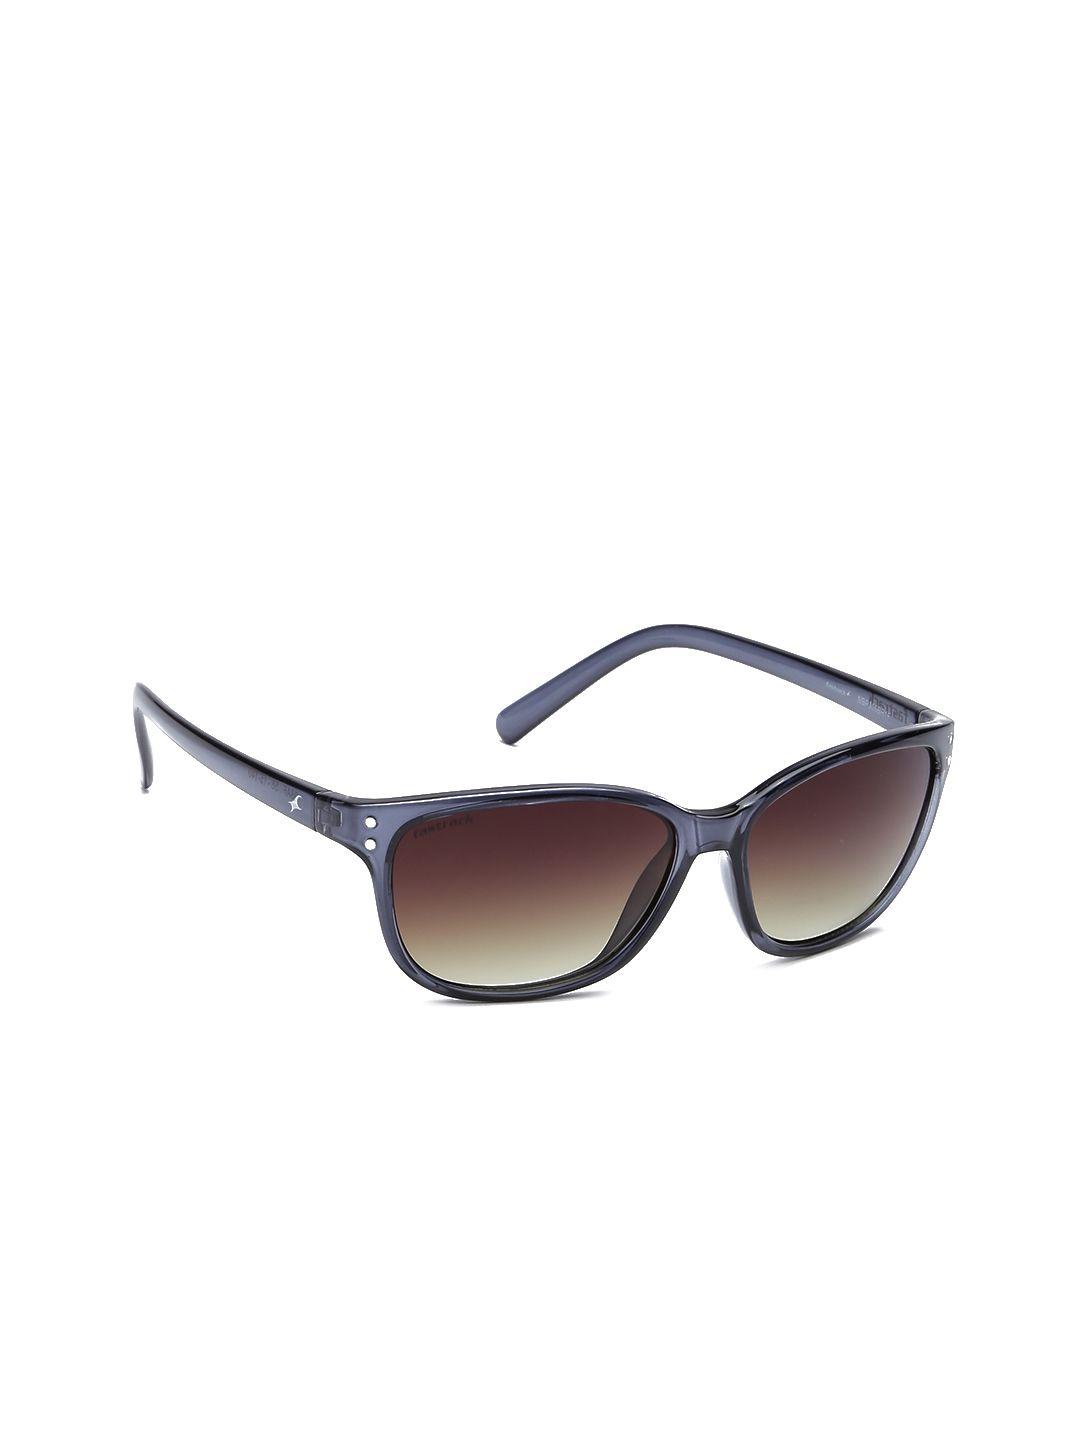 fastrack-women-rectangle-sunglasses-nbp305br1f